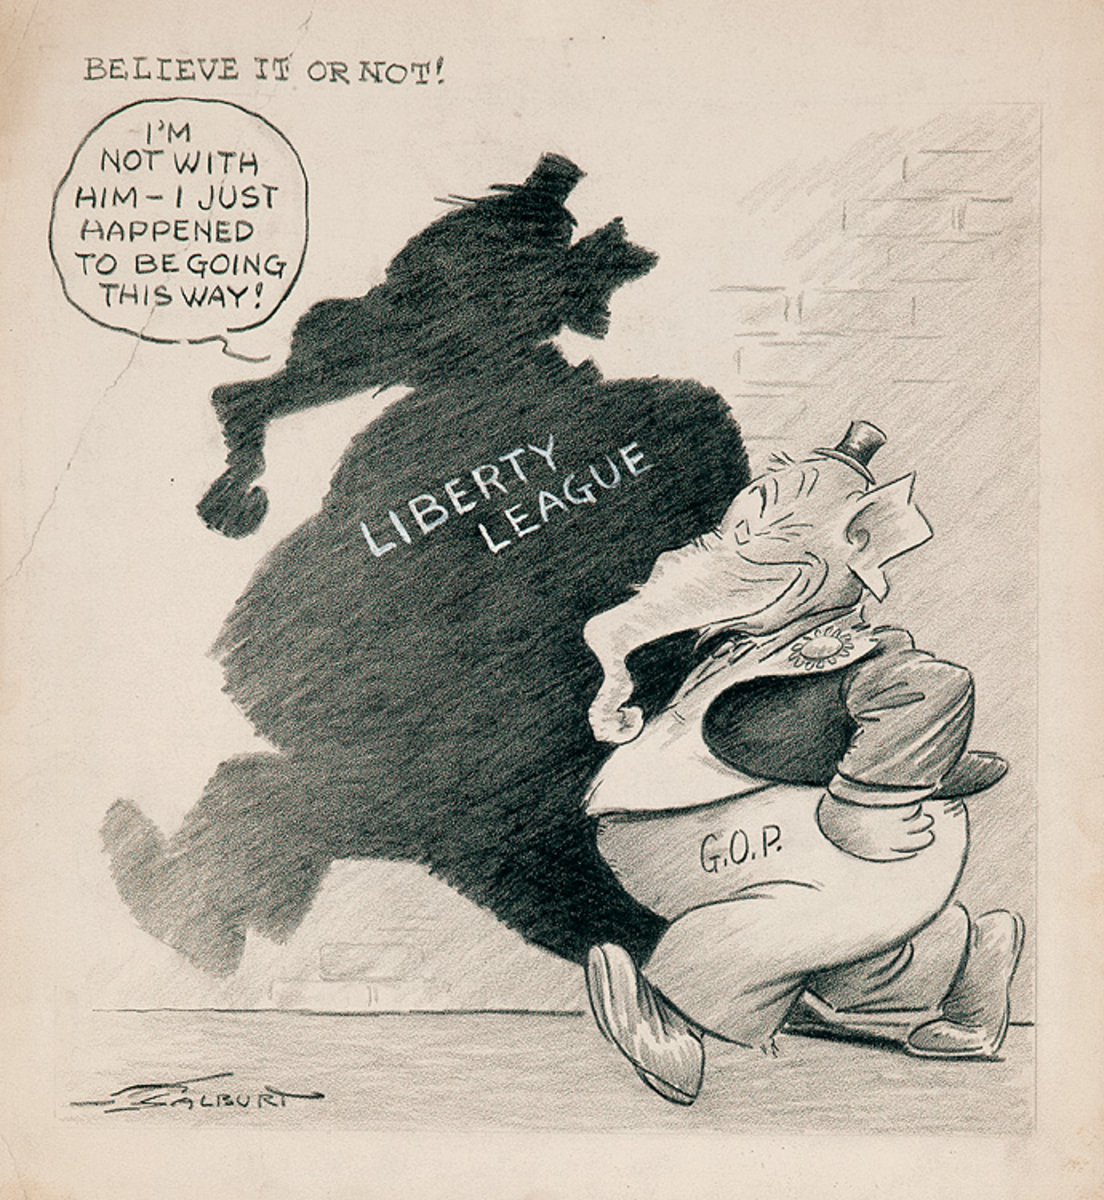 Original Depression Era Political Cartoon Artwork Believe it or Not!